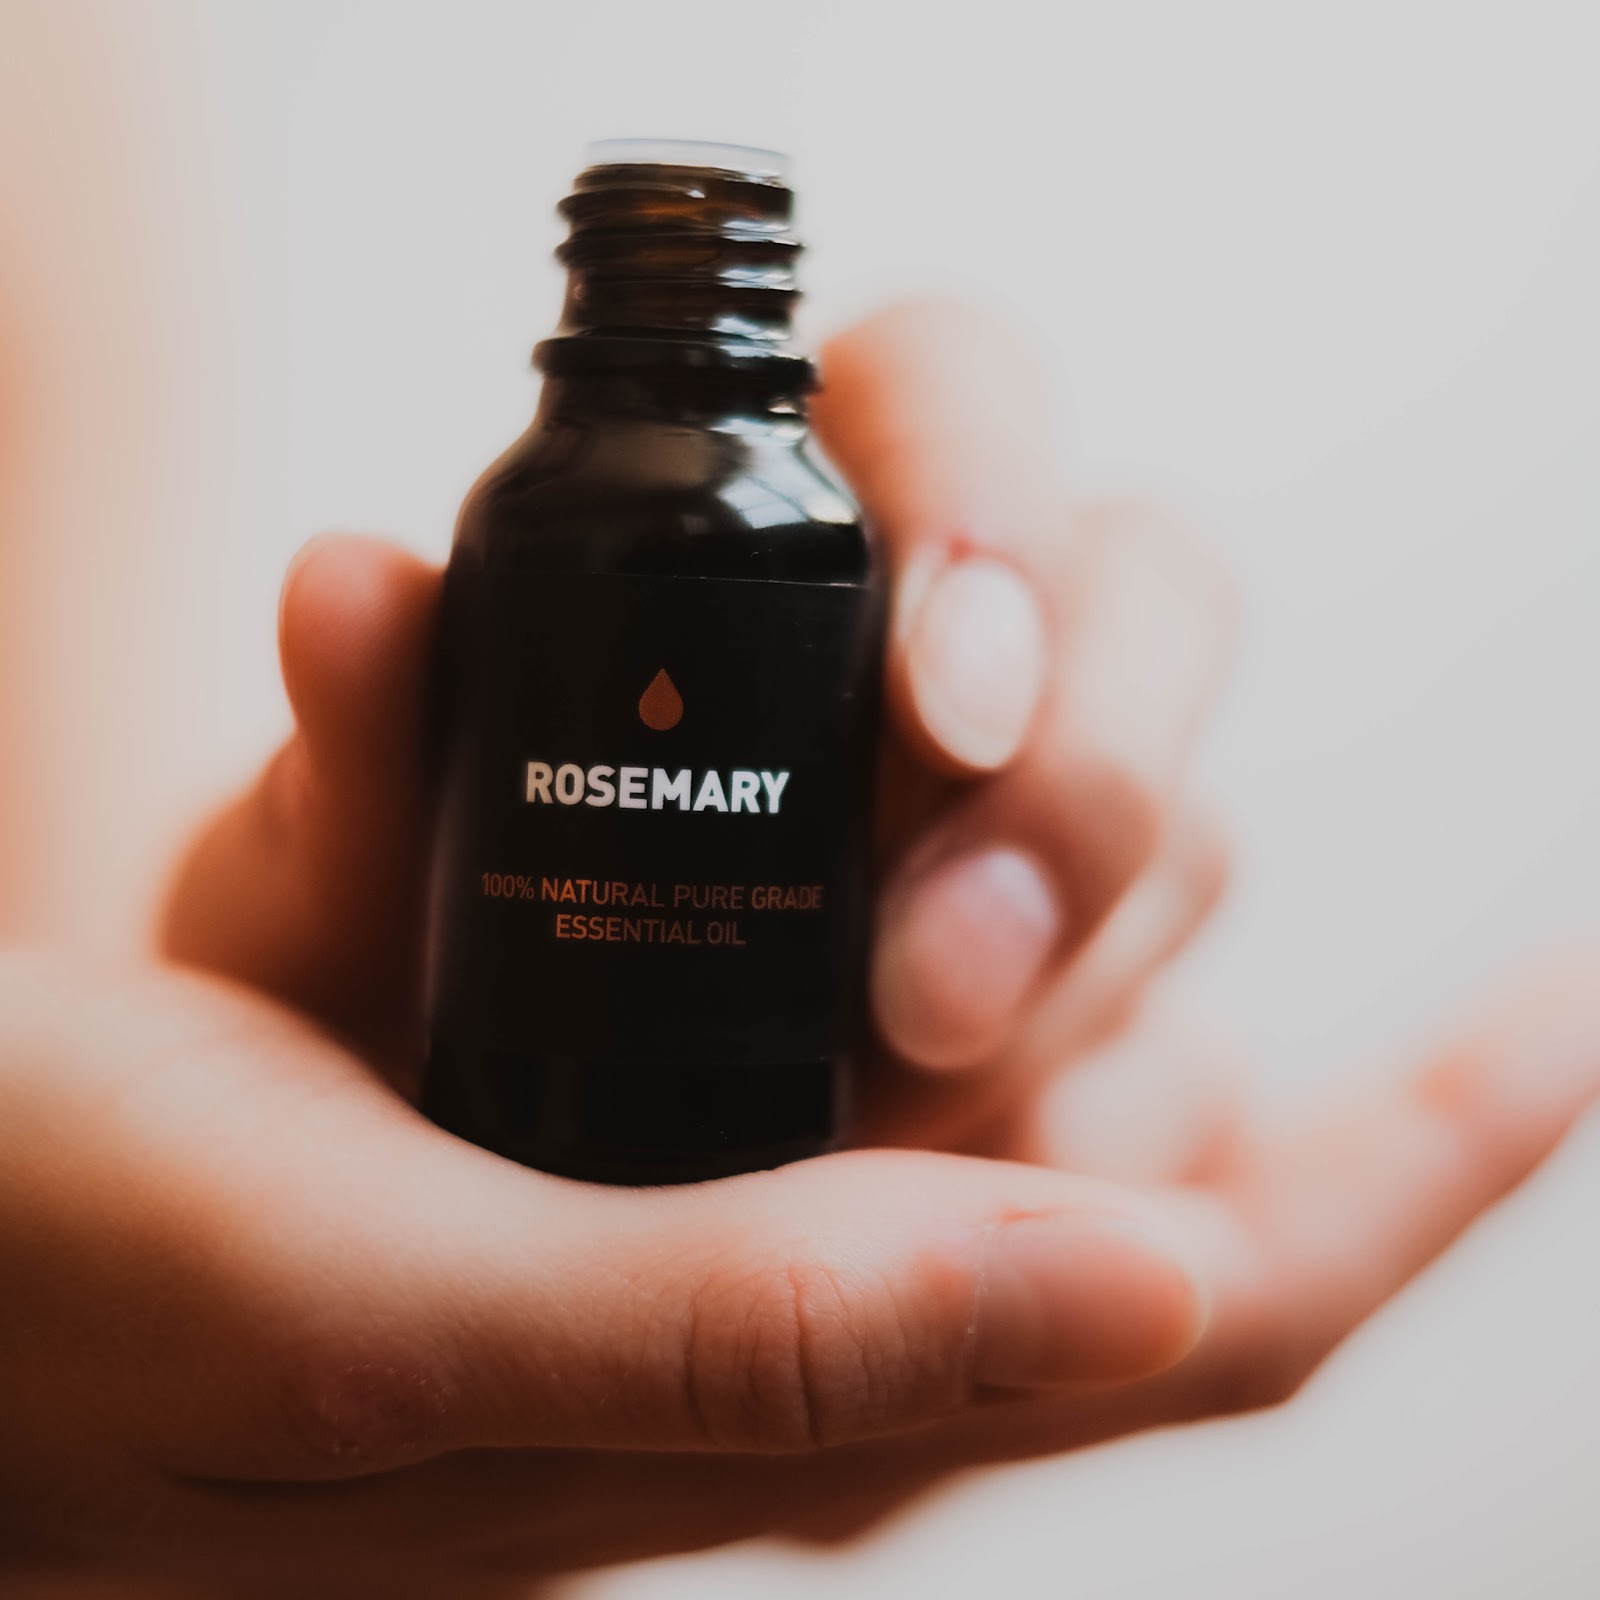 Rosemary oil: essential oils for headaches